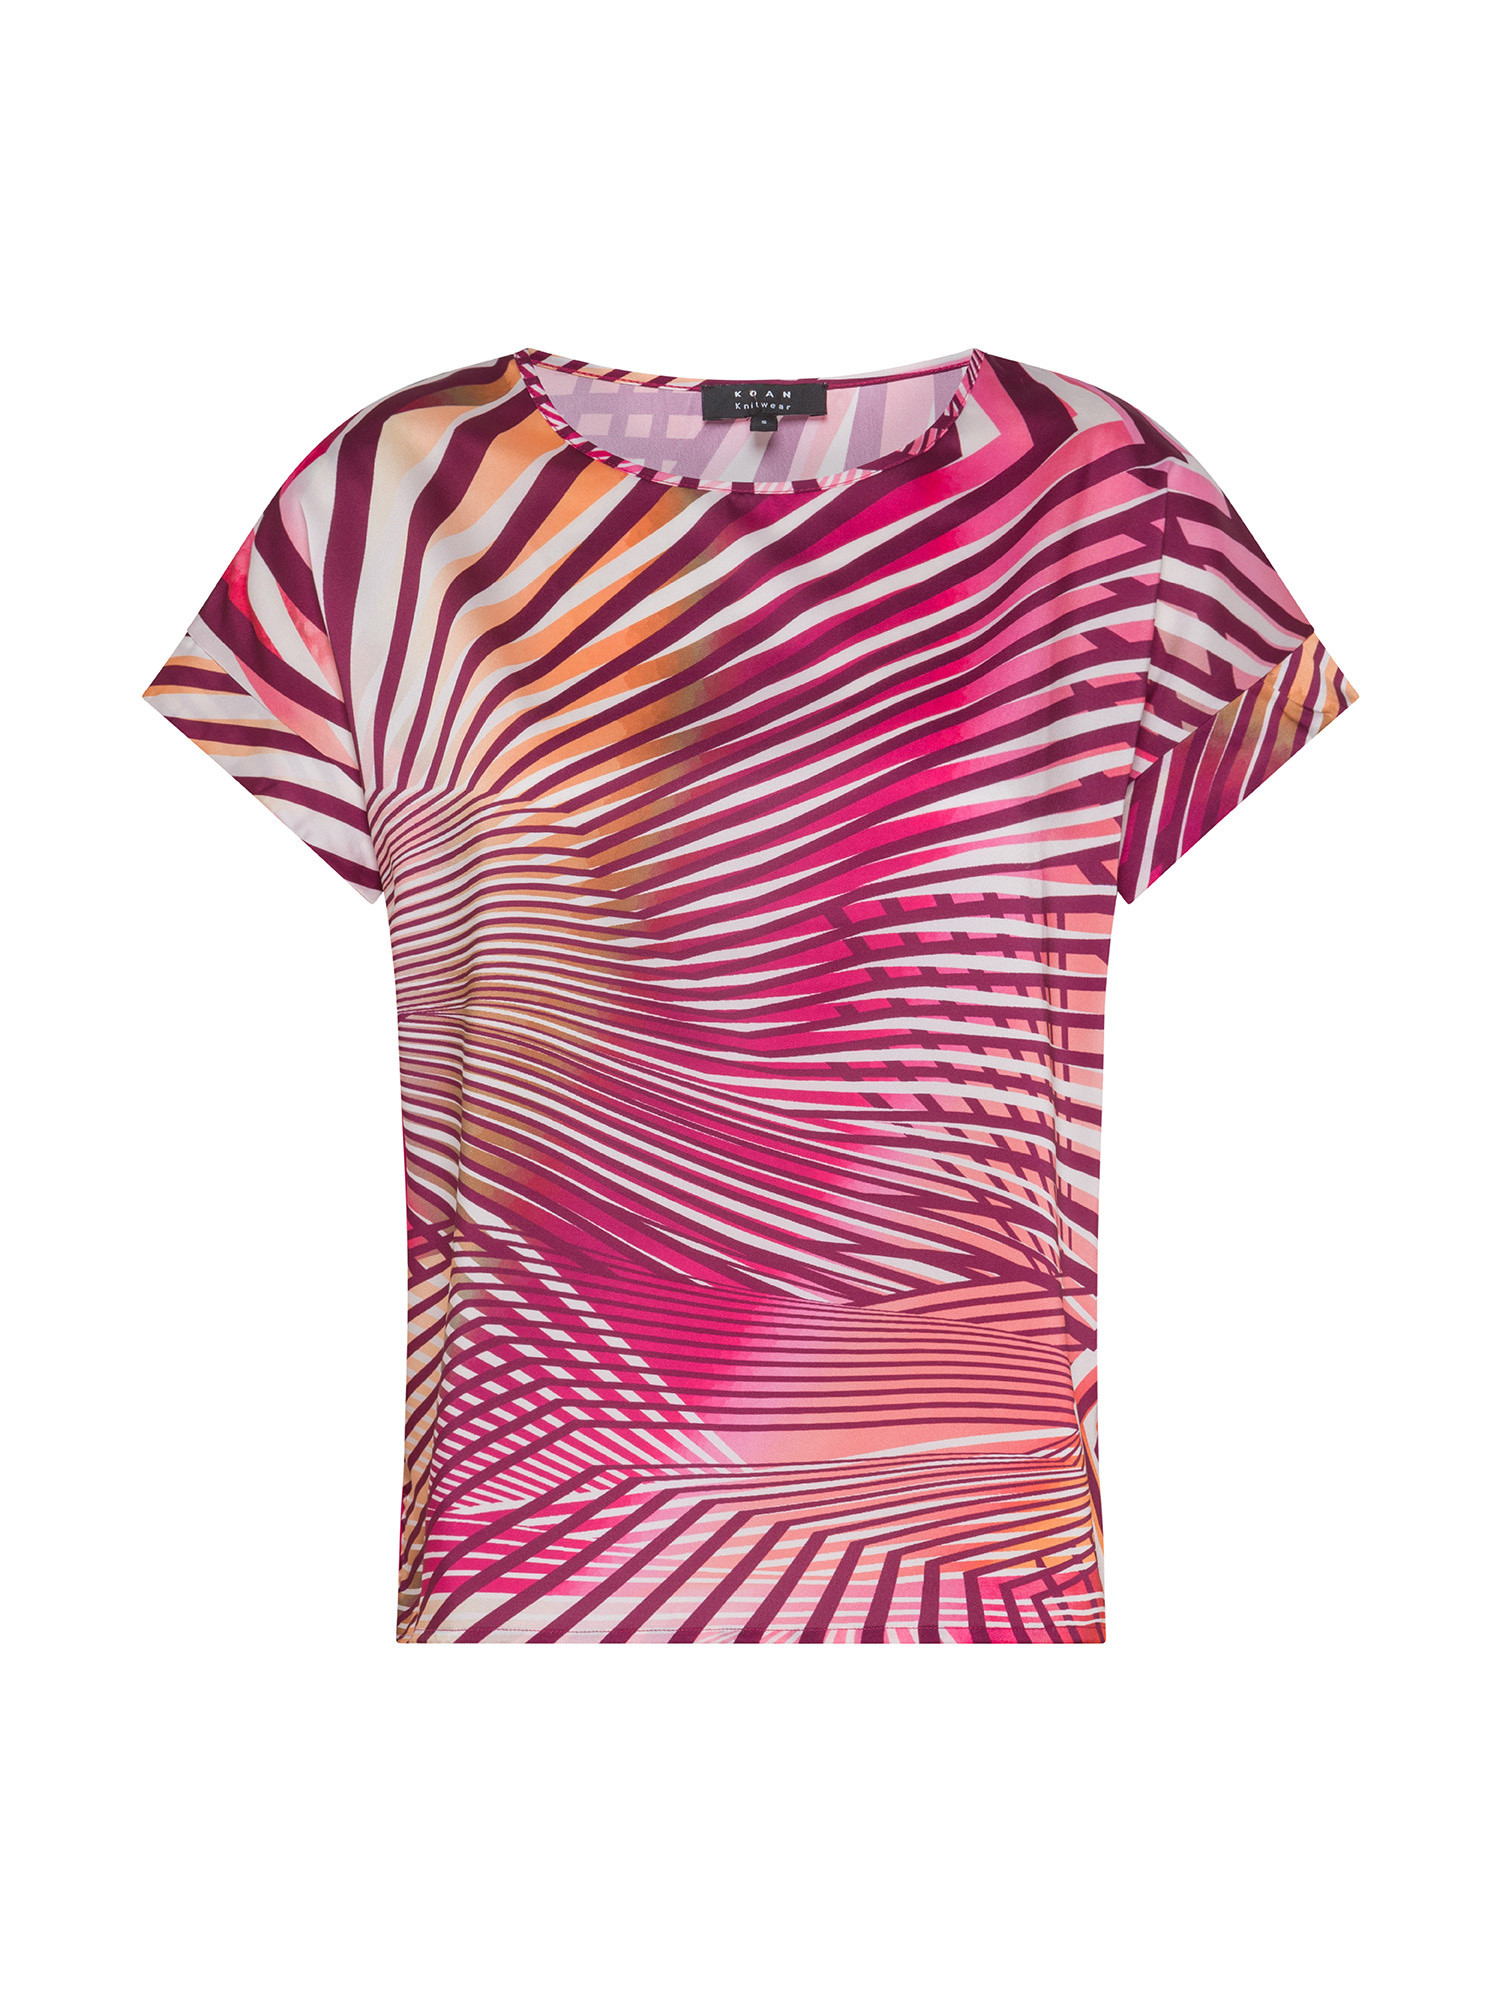 Koan - T-shirt with micro pattern, Pink Fuchsia, large image number 0